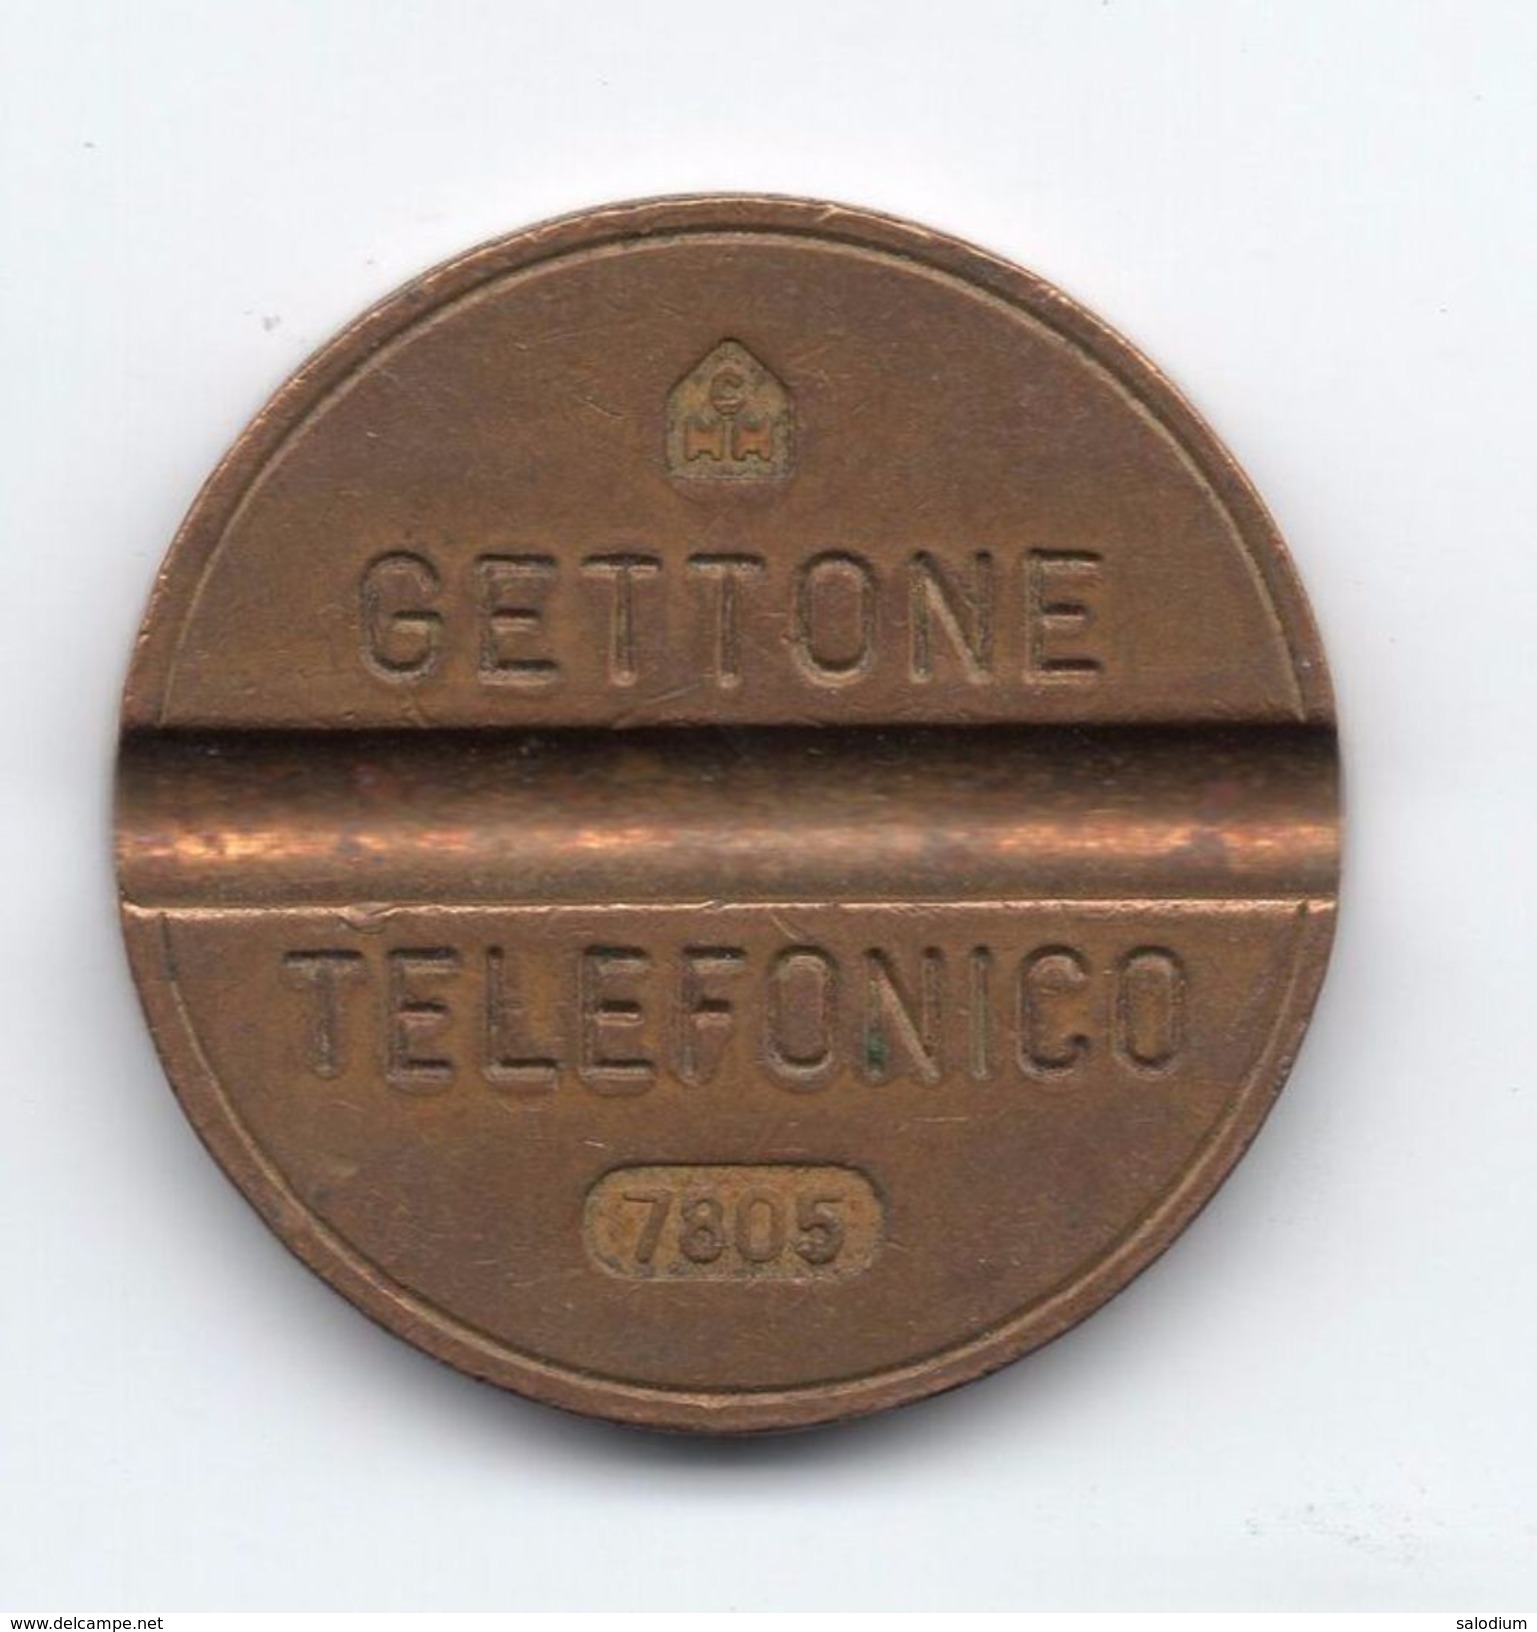 Gettone Telefonico 7805 Token Telephone - (Id-802) - Firma's